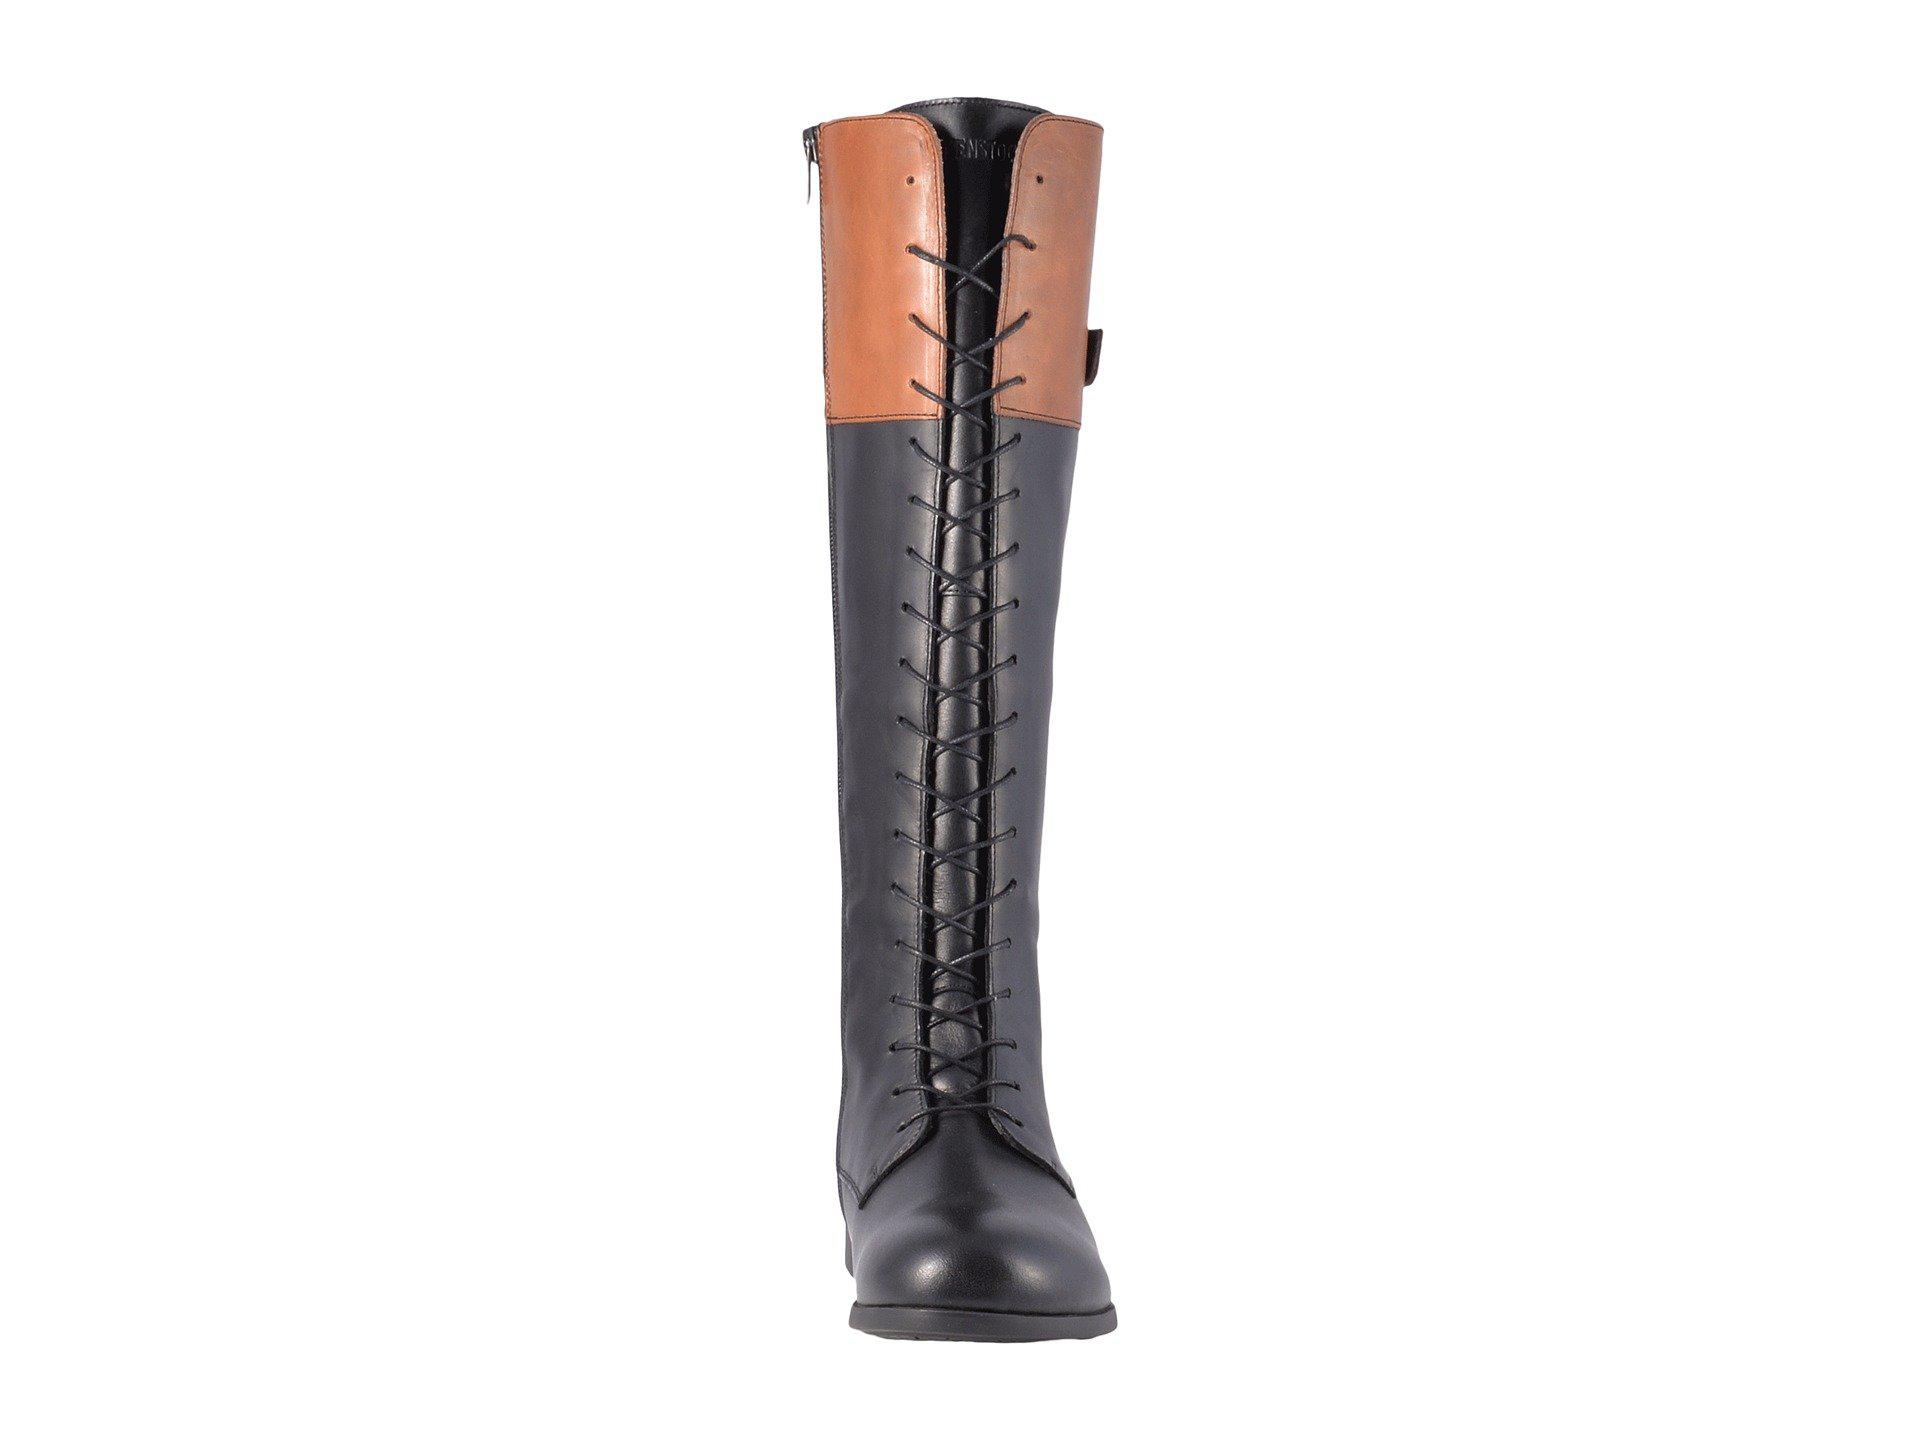 Birkenstock Leather S Longford Riding Boot Black/camel Size 40 Eu (9-9.5 M  Us ) | Lyst